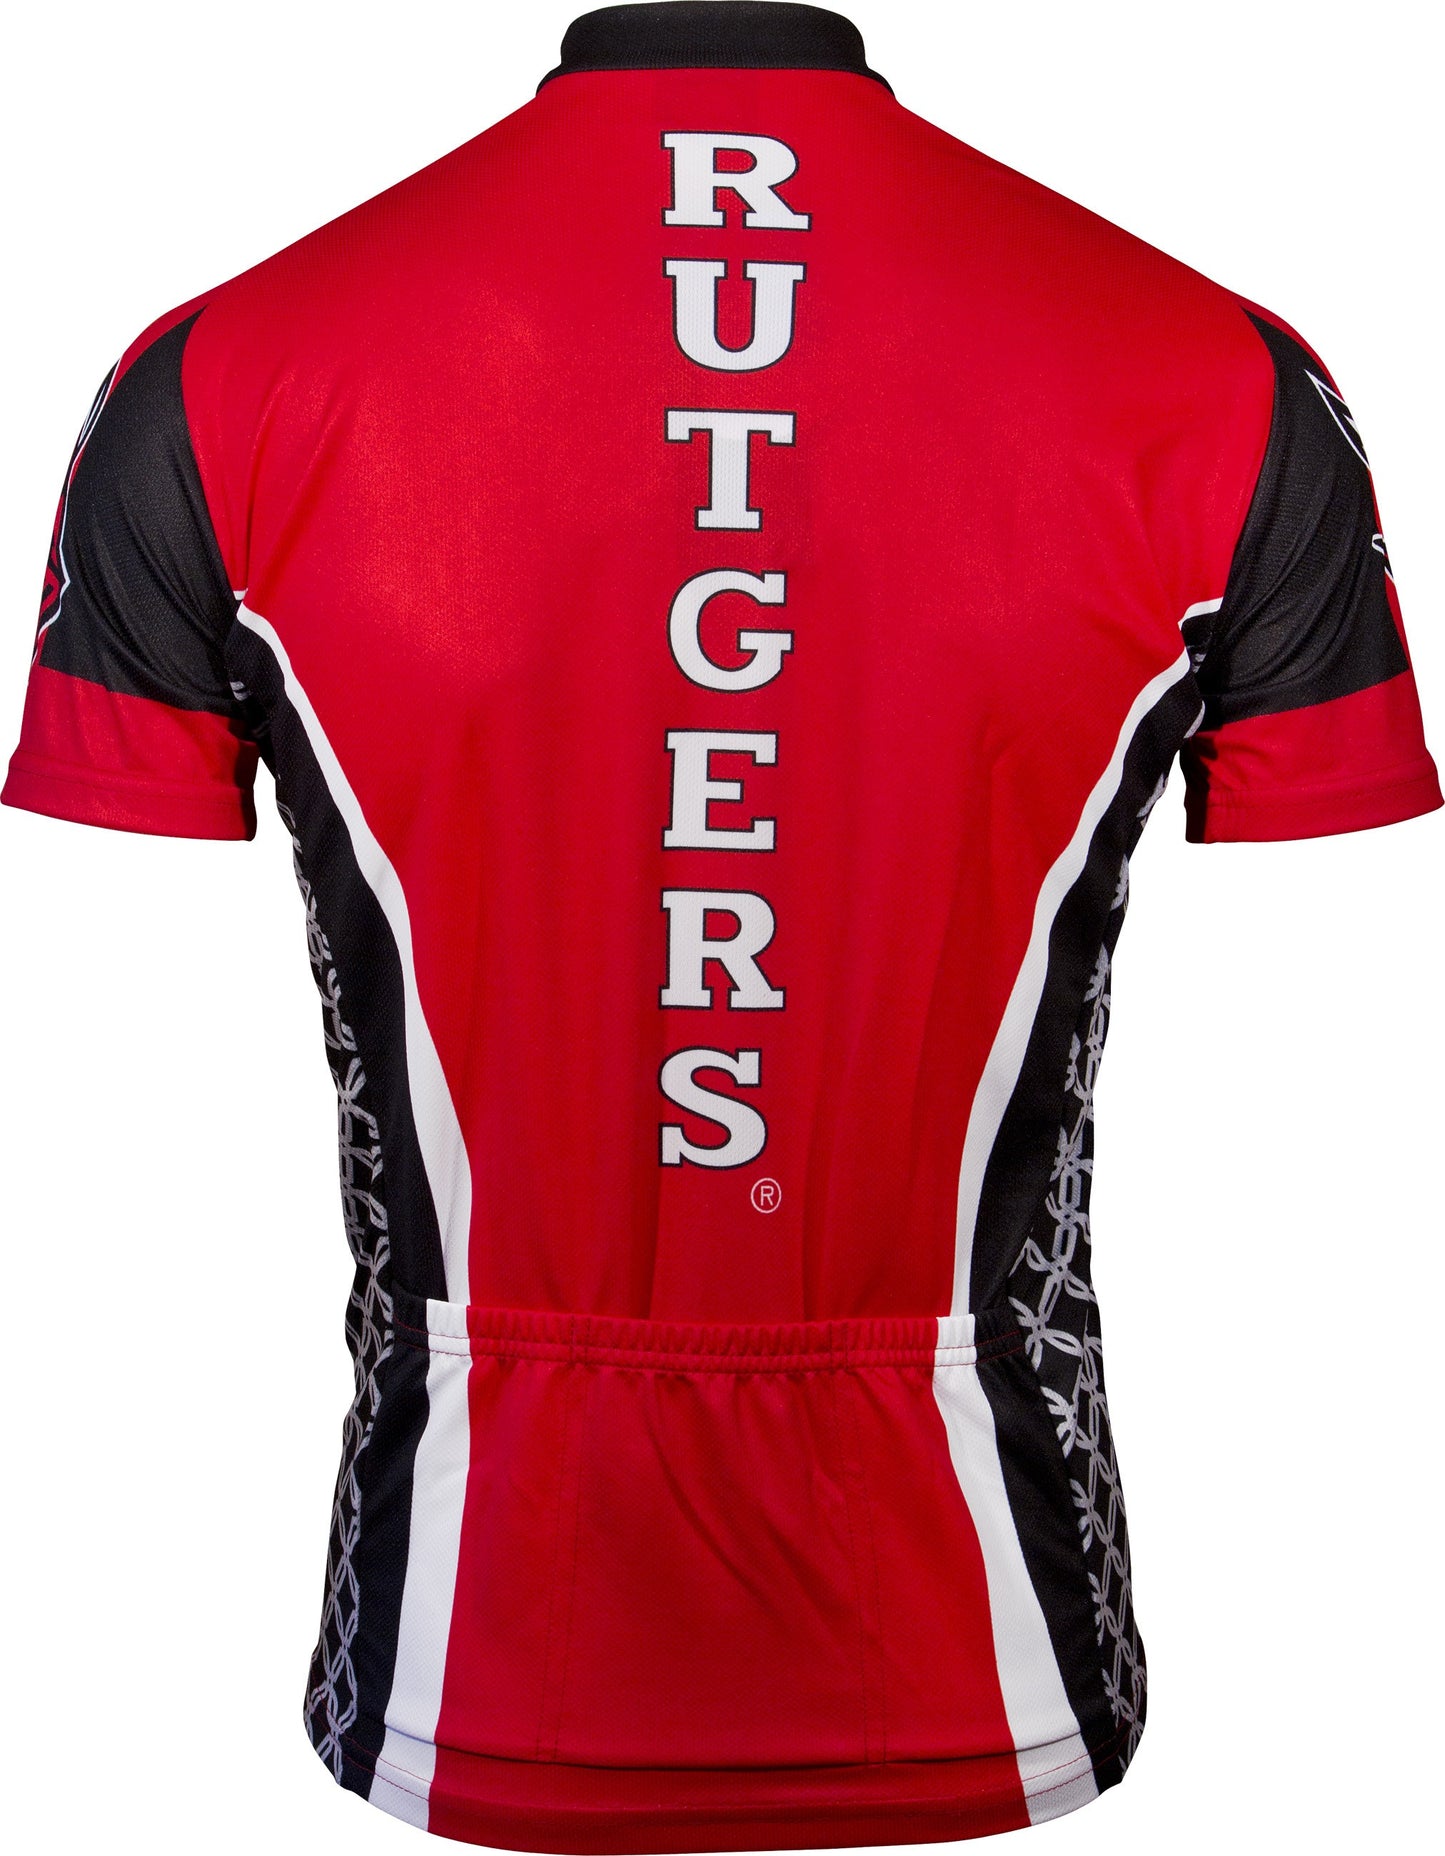 Rutgers Scarlet Knights Men's Cycling Jersey (S, M, L, XL, 2XL, 3XL)